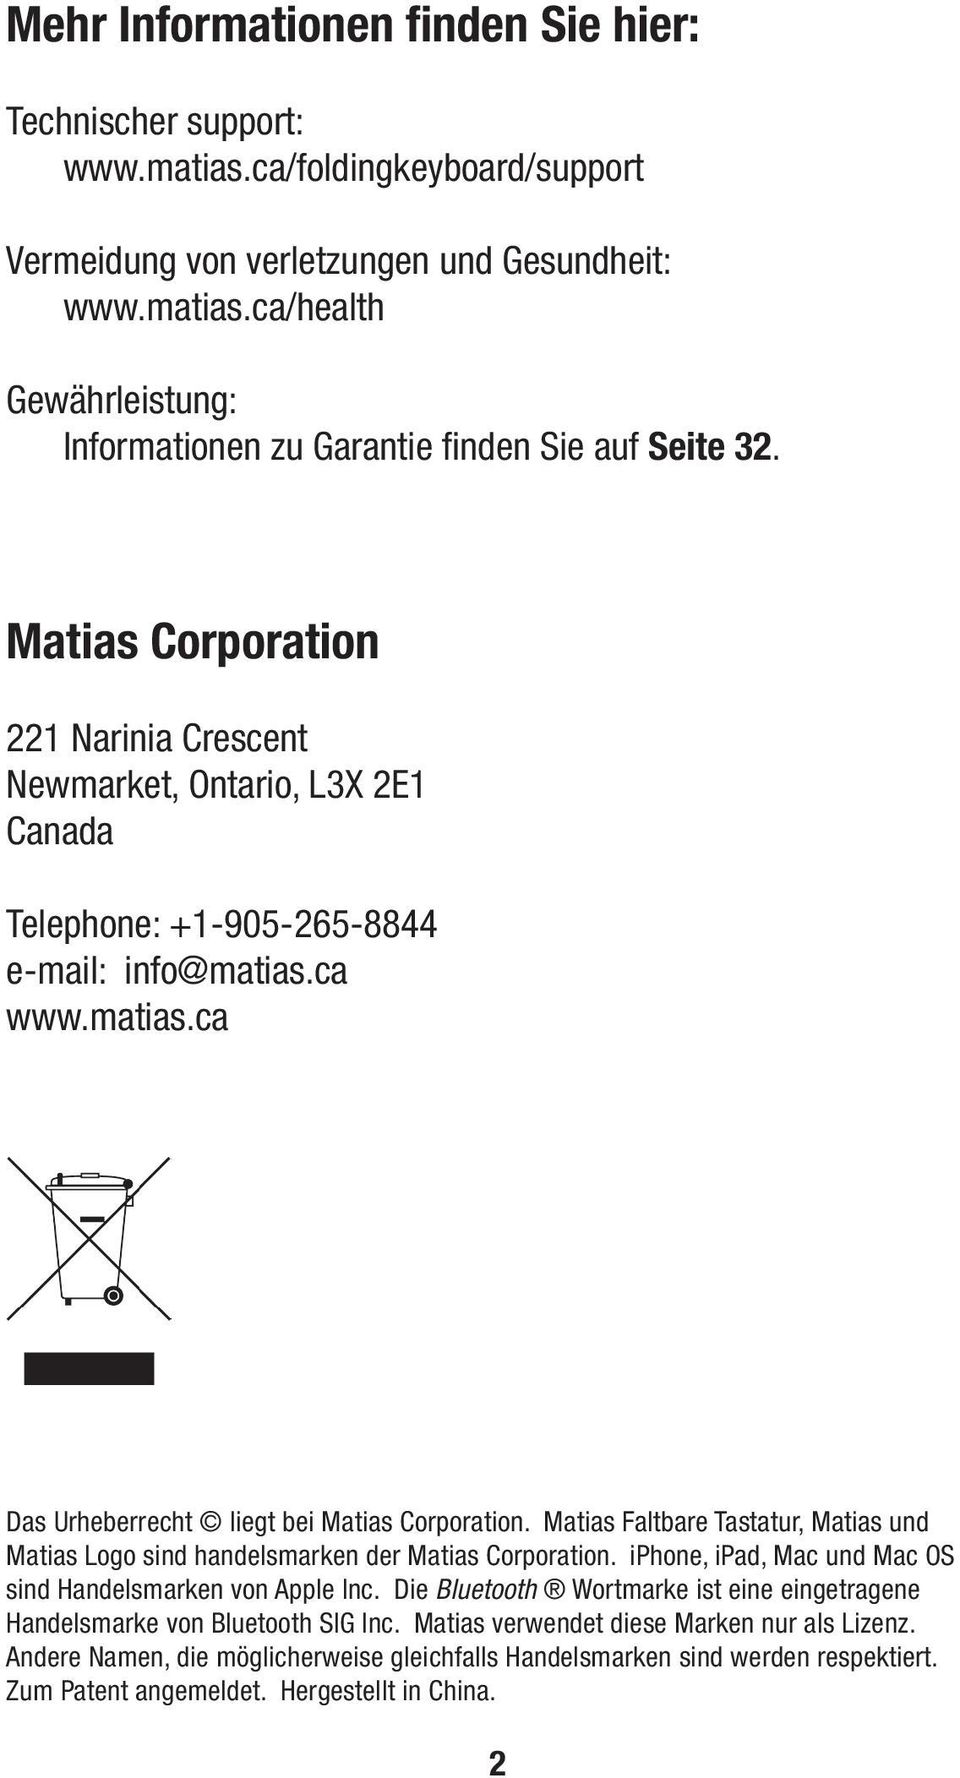 Matias Faltbare Tastatur, Matias und Matias Logo sind handelsmarken der Matias Corporation. iphone, ipad, Mac und Mac OS sind Handelsmarken von Apple Inc.